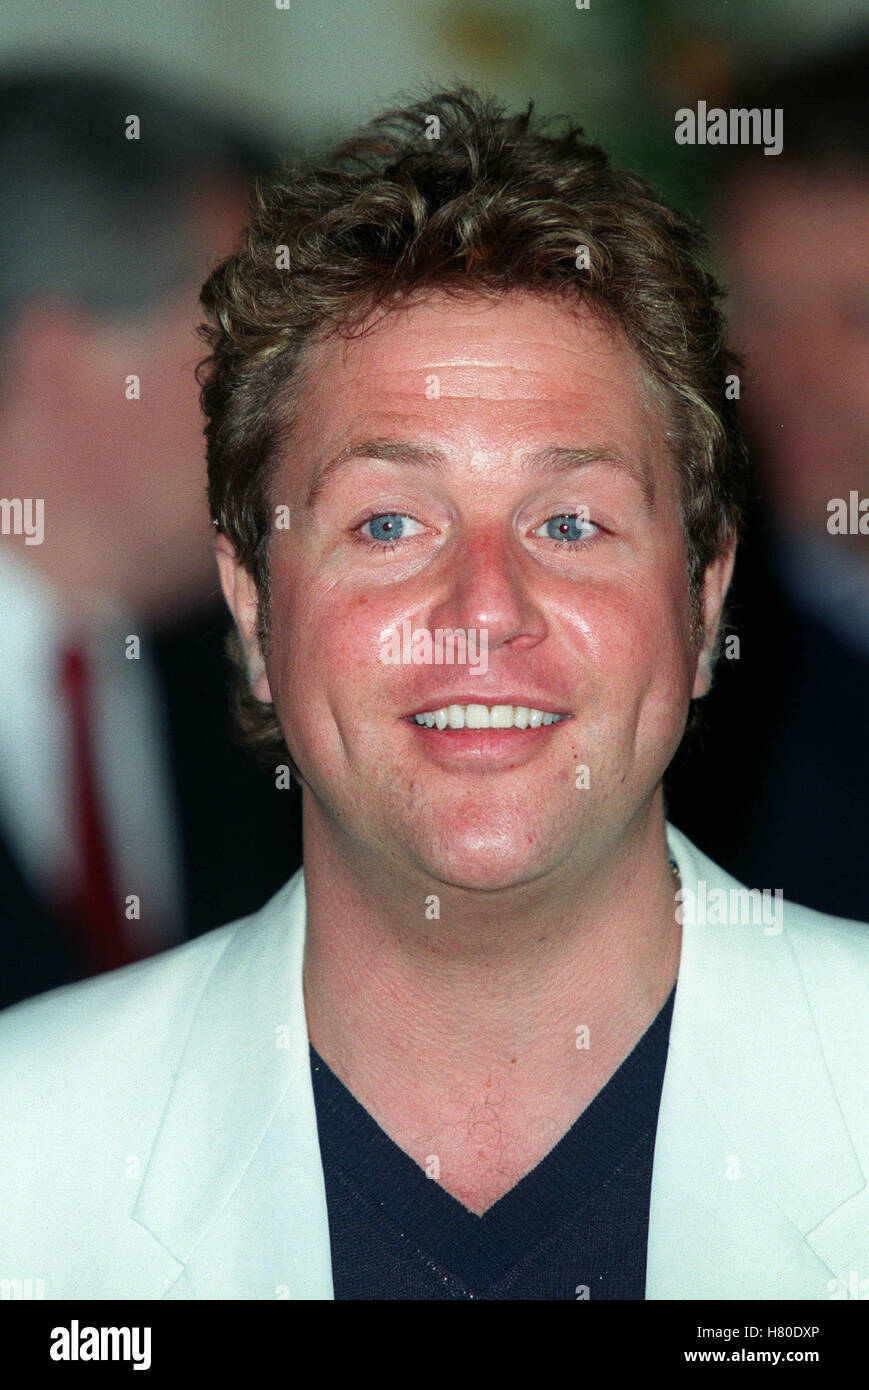 MICHAEL BALL LONDON ENGLAND 25 June 1999 Stock Photo - Alamy